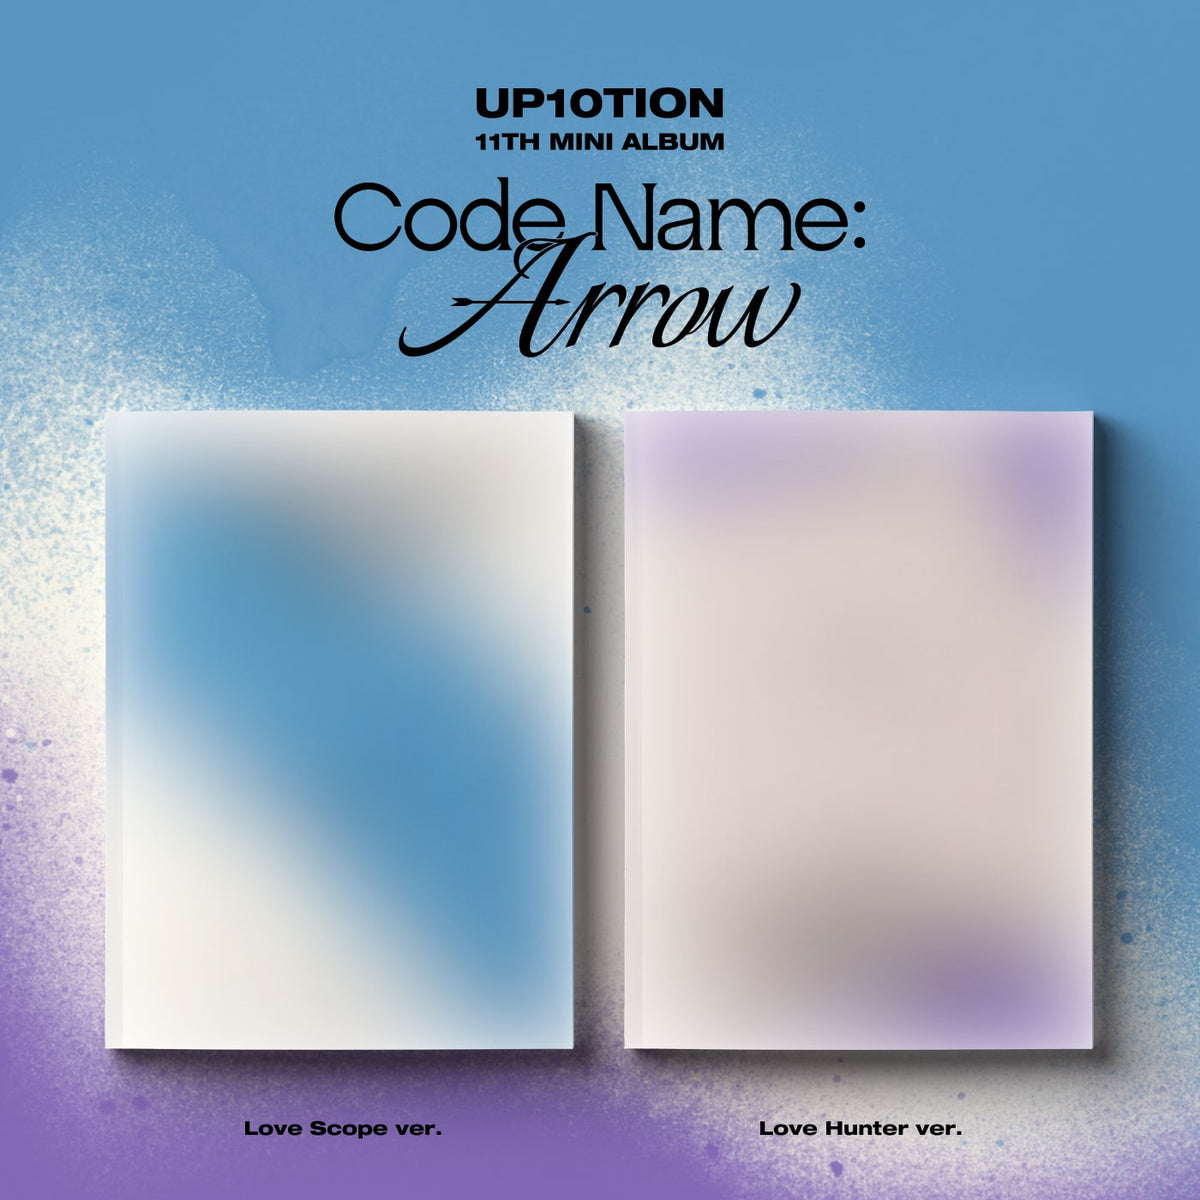 UP10TION - 11th Mini Album [Code Name: Arrow]